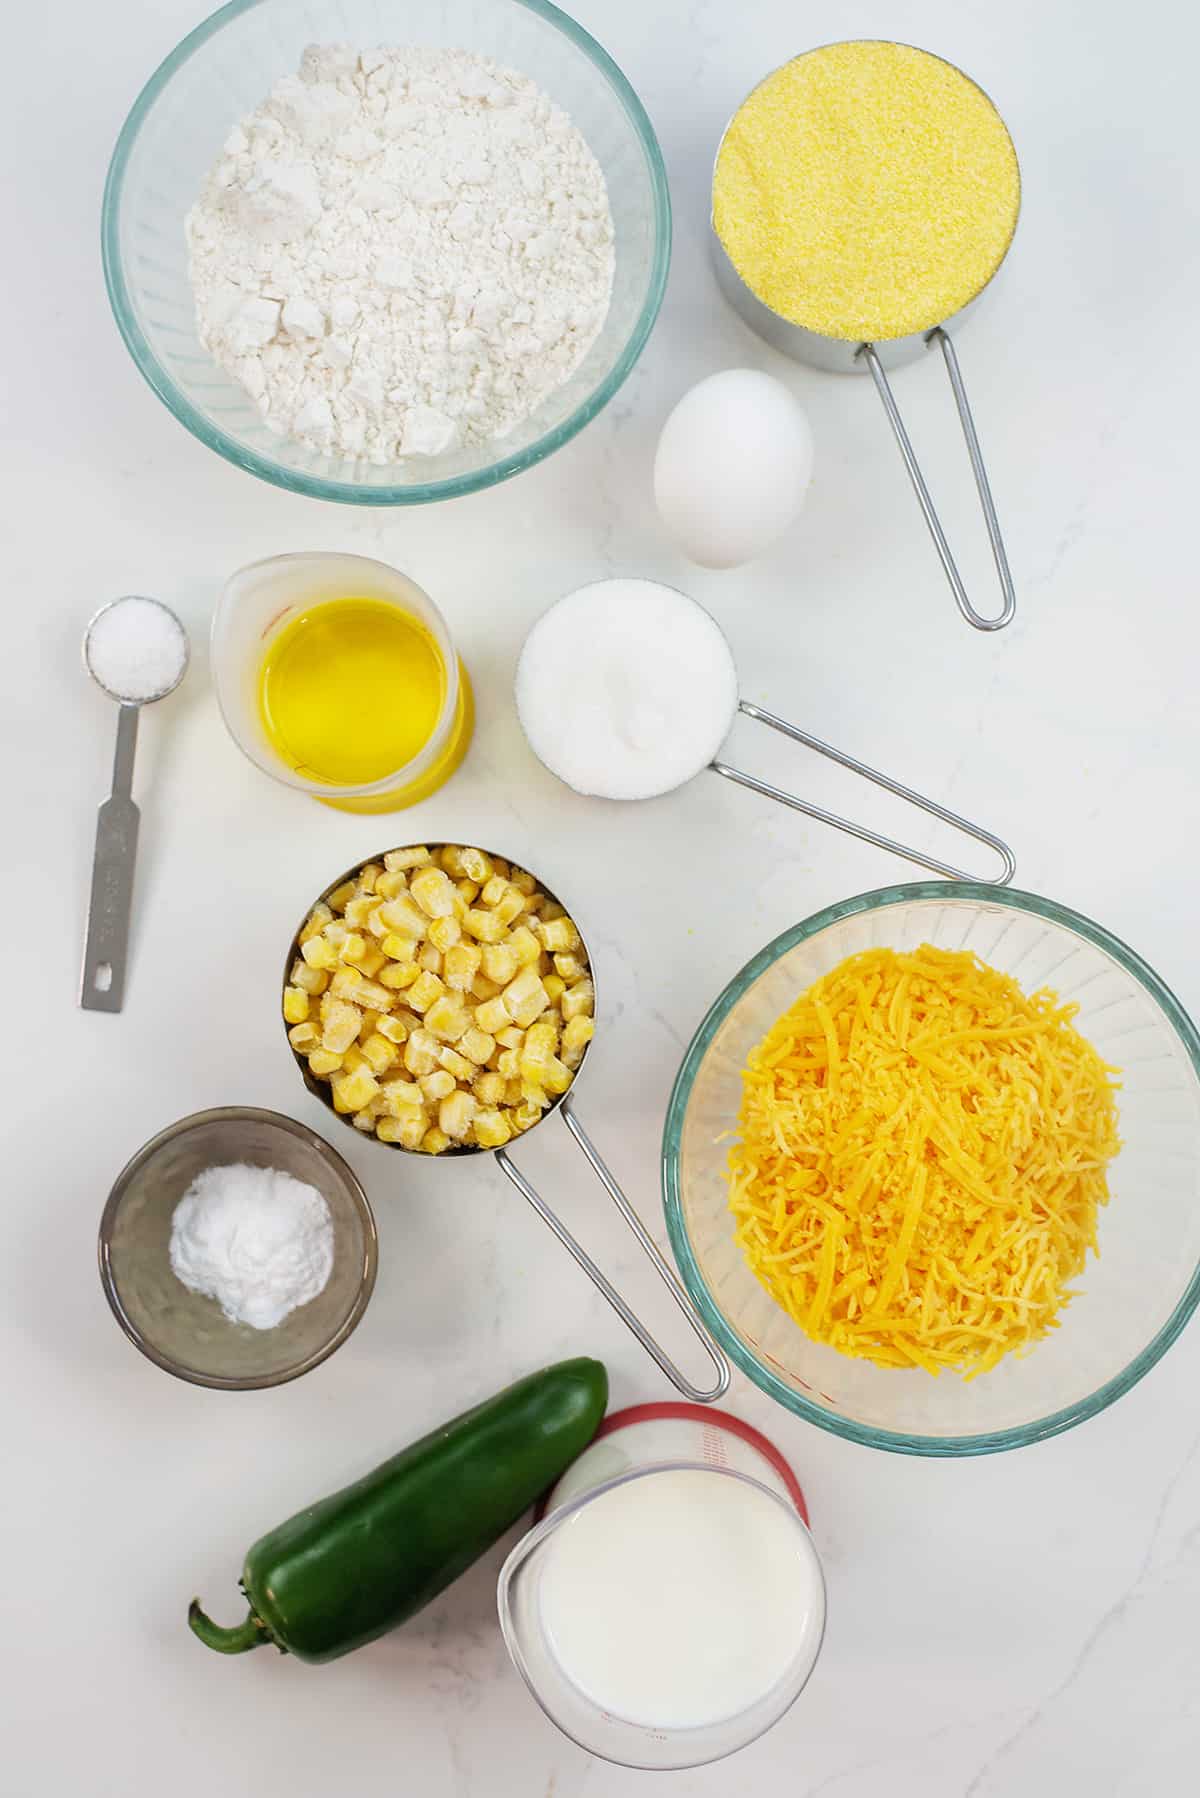 Ingredients for jalapeno cheddar cornbread recipe.